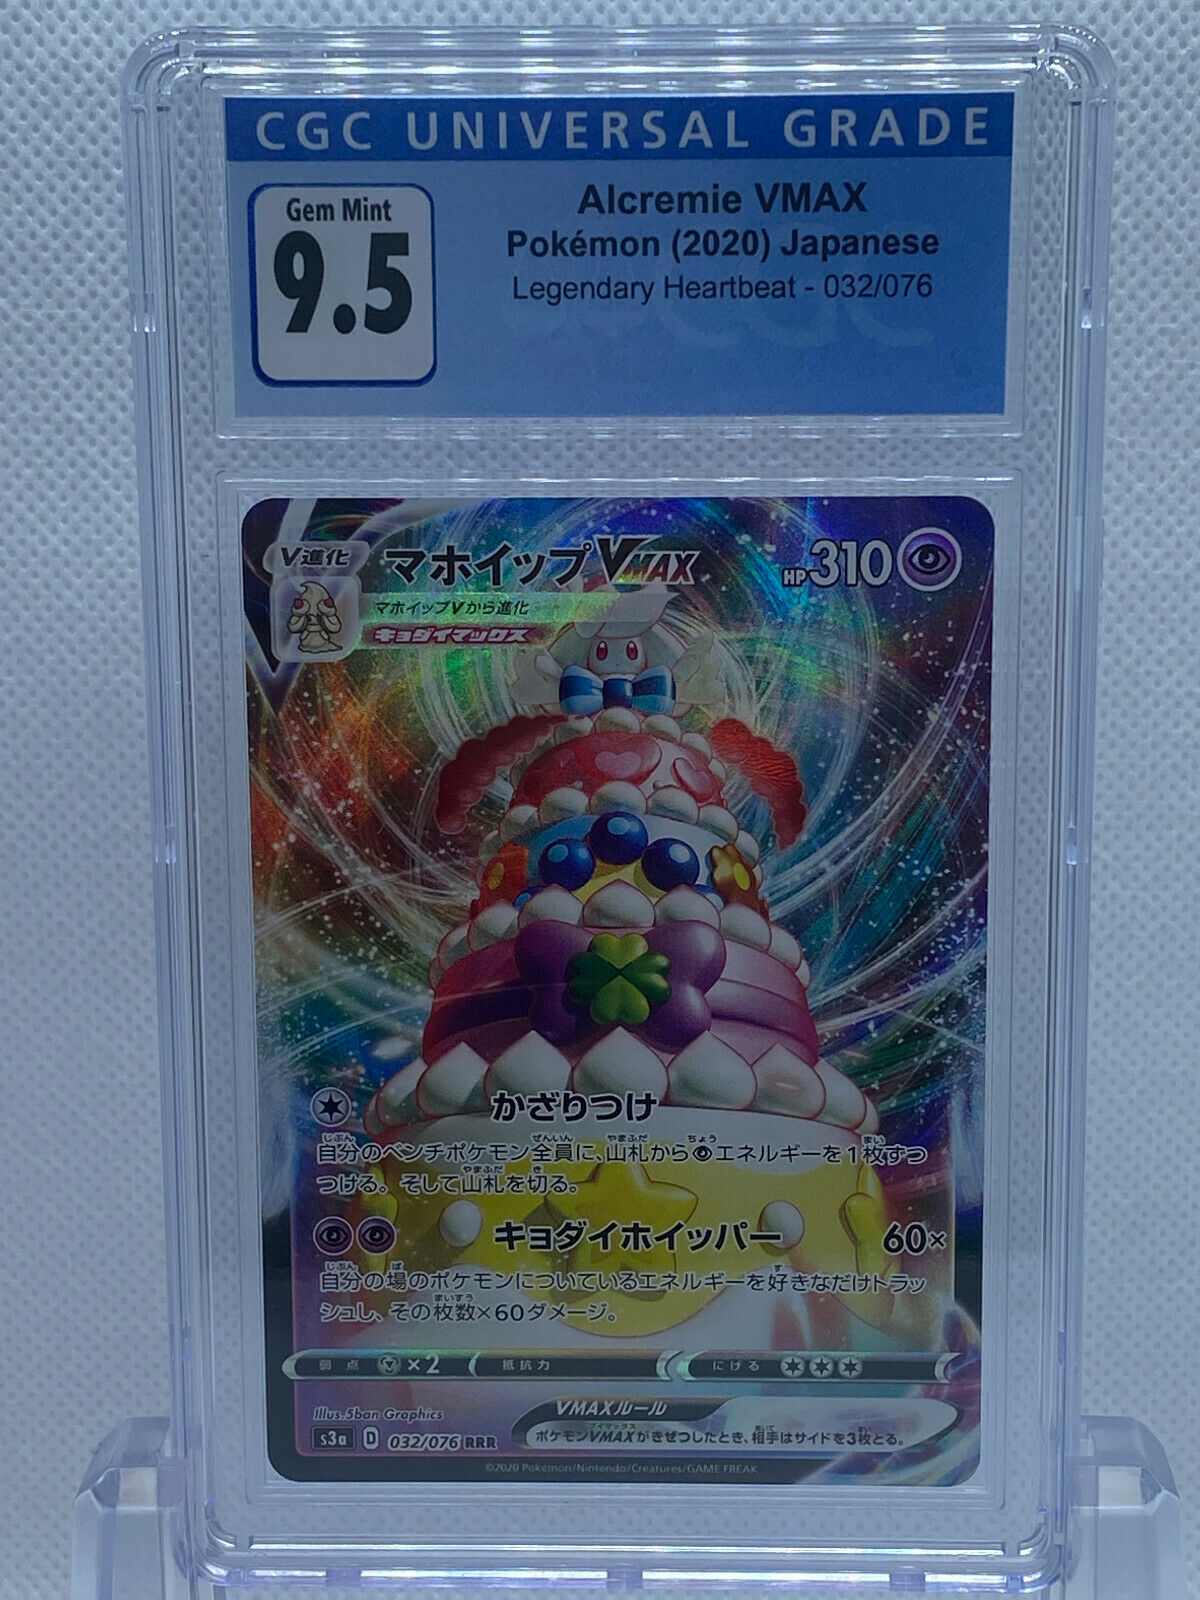 Pokémon Japanese Legendary Heartbeat 032/076 Alcremie VMax GEM Mint 9.5 CGC